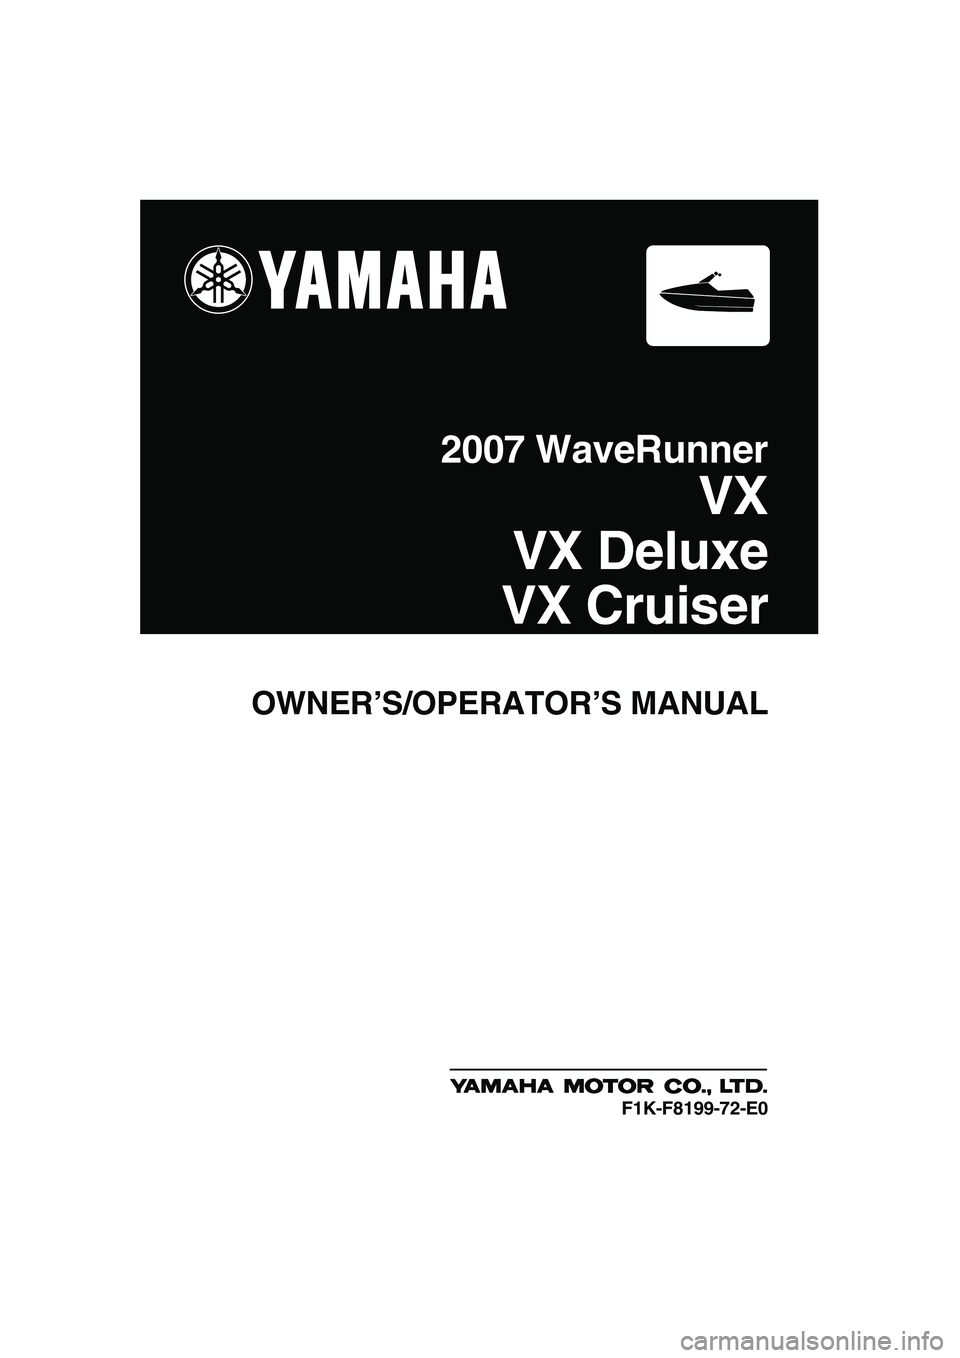 YAMAHA VX CRUISER 2007  Owners Manual OWNER’S/OPERATOR’S MANUAL
2007 WaveRunner
VX
VX Deluxe
VX Cruiser
F1K-F8199-72-E0
UF1K72E0.book  Page 1  Wednesday, August 2, 2006  10:43 AM 